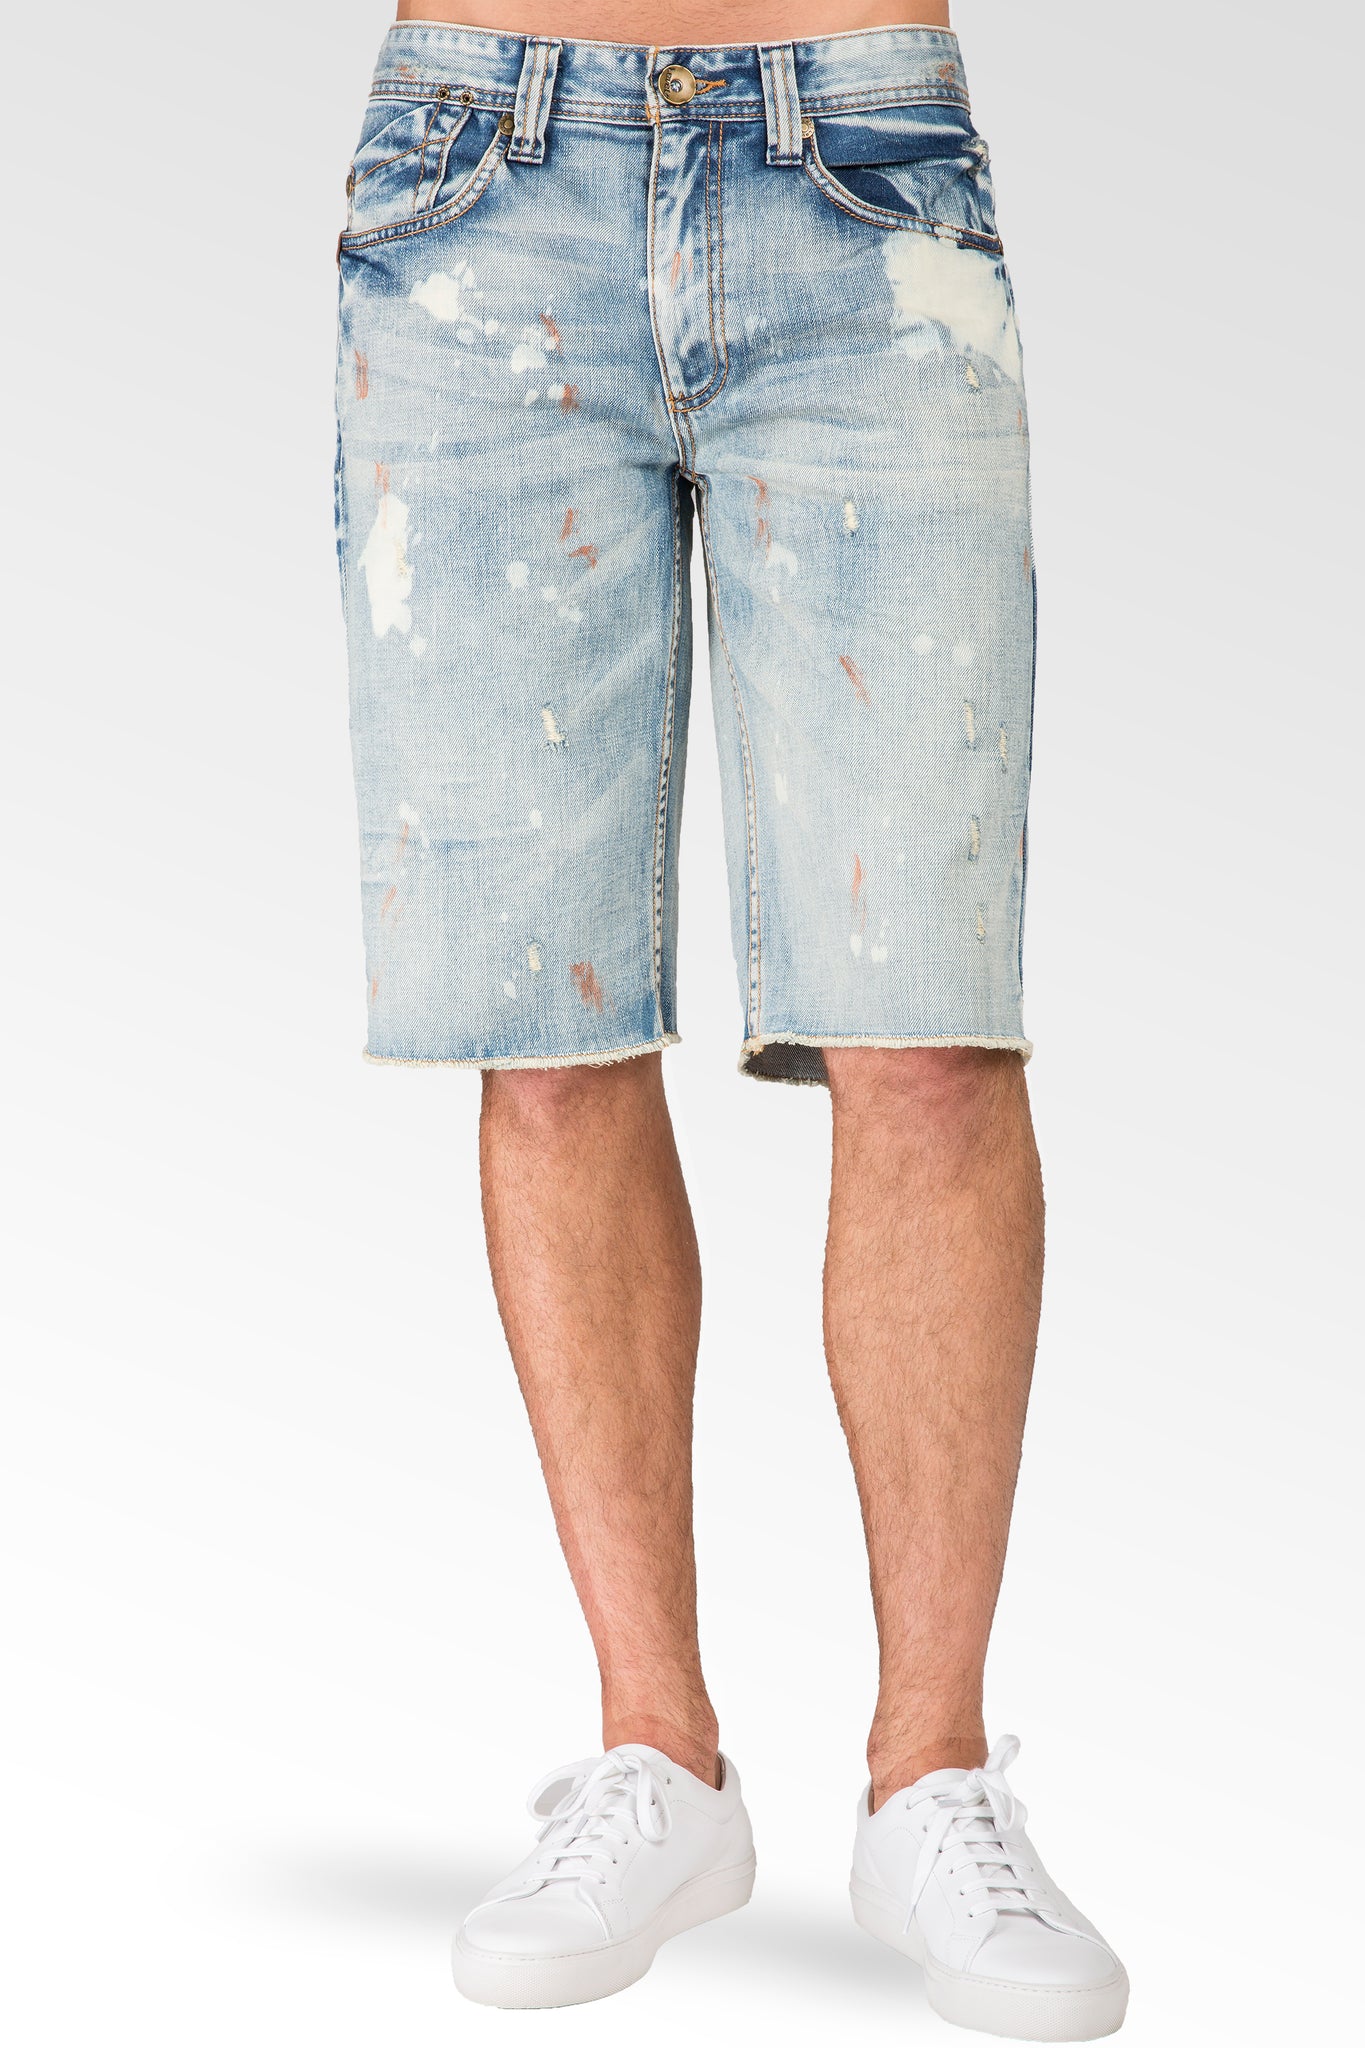 Relaxed Midrise Bleach Blue Cut Off Premium Denim Shorts 13" Inseam paint splatter